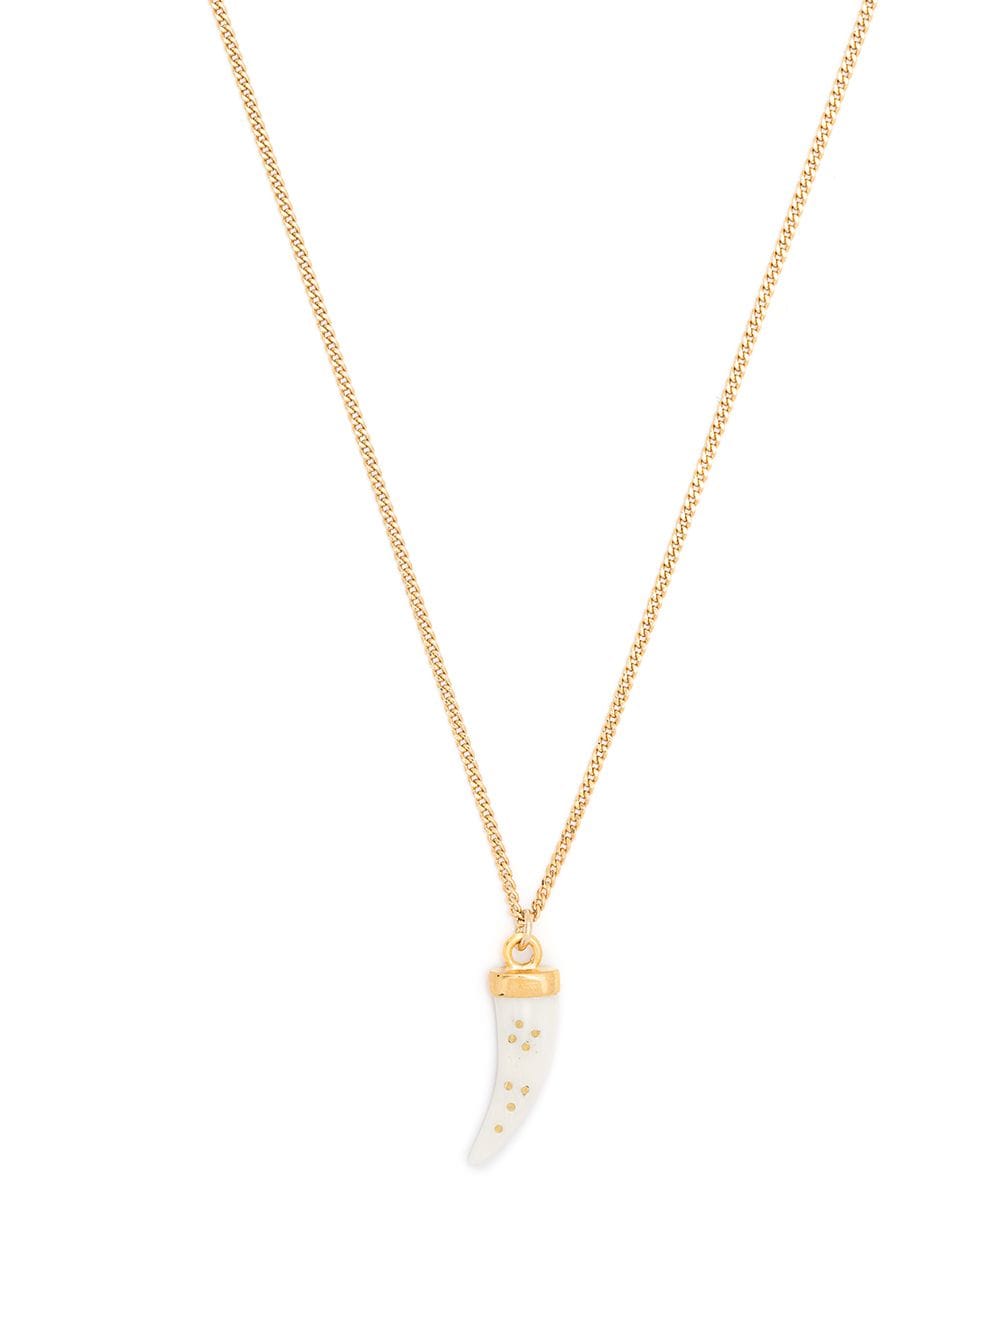 ISABEL MARANT pendant chain necklace - Gold von ISABEL MARANT